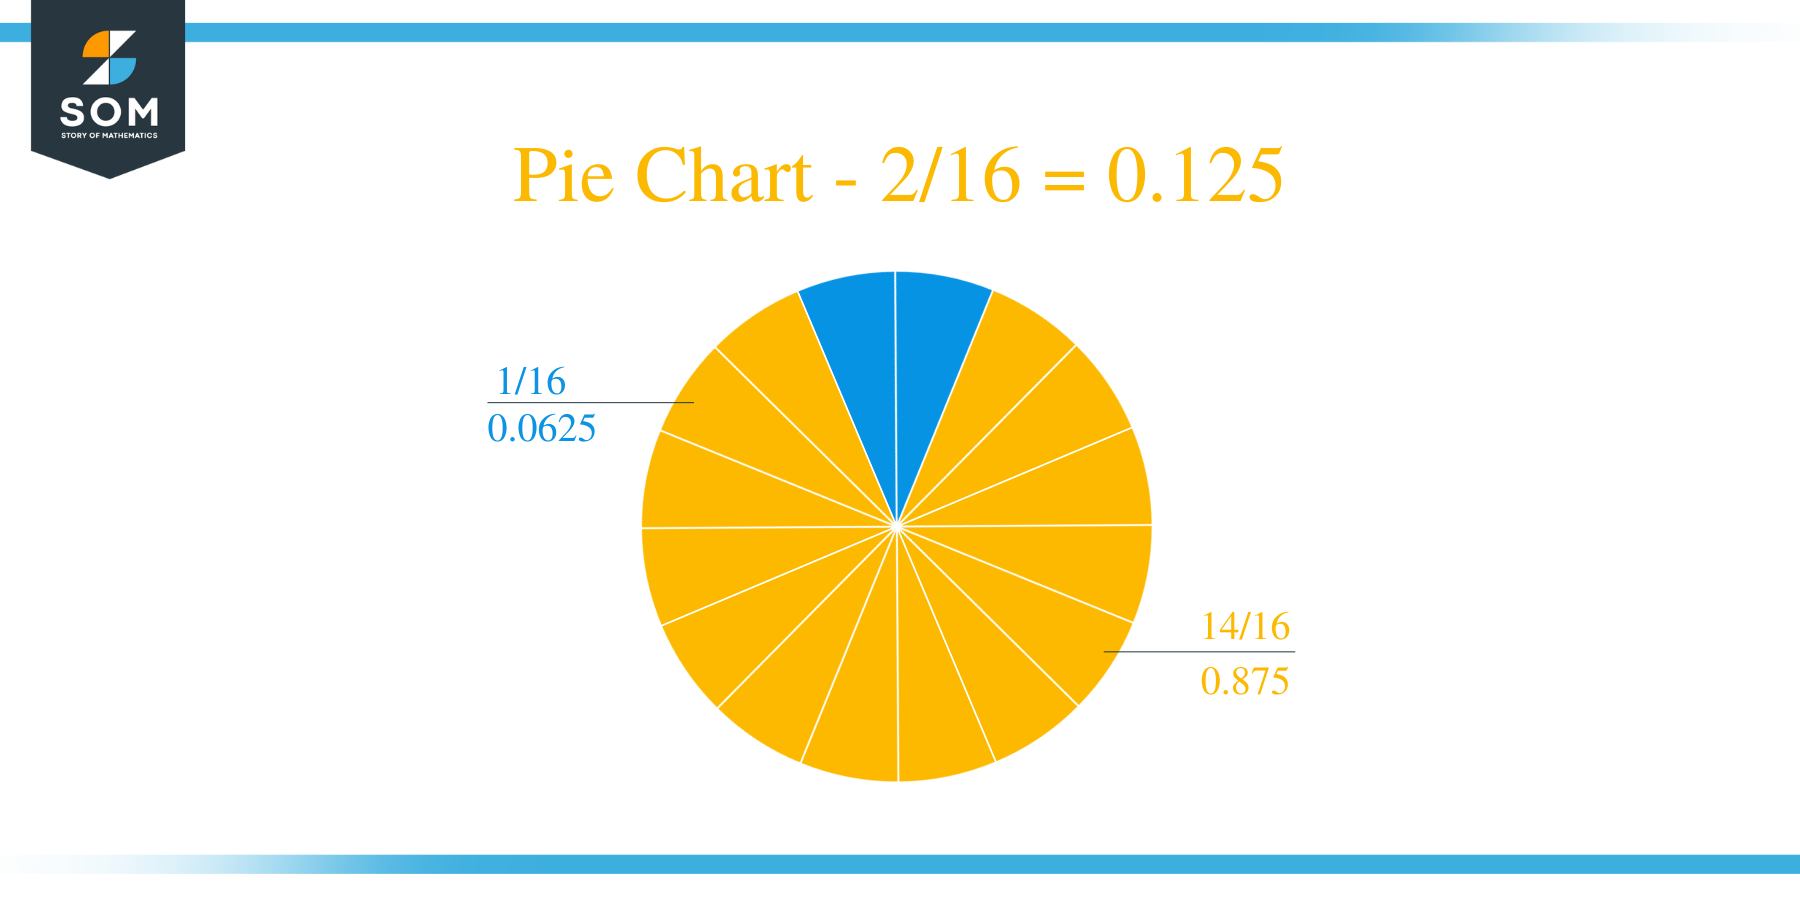 Pie Chart 2/16 Long Division Method